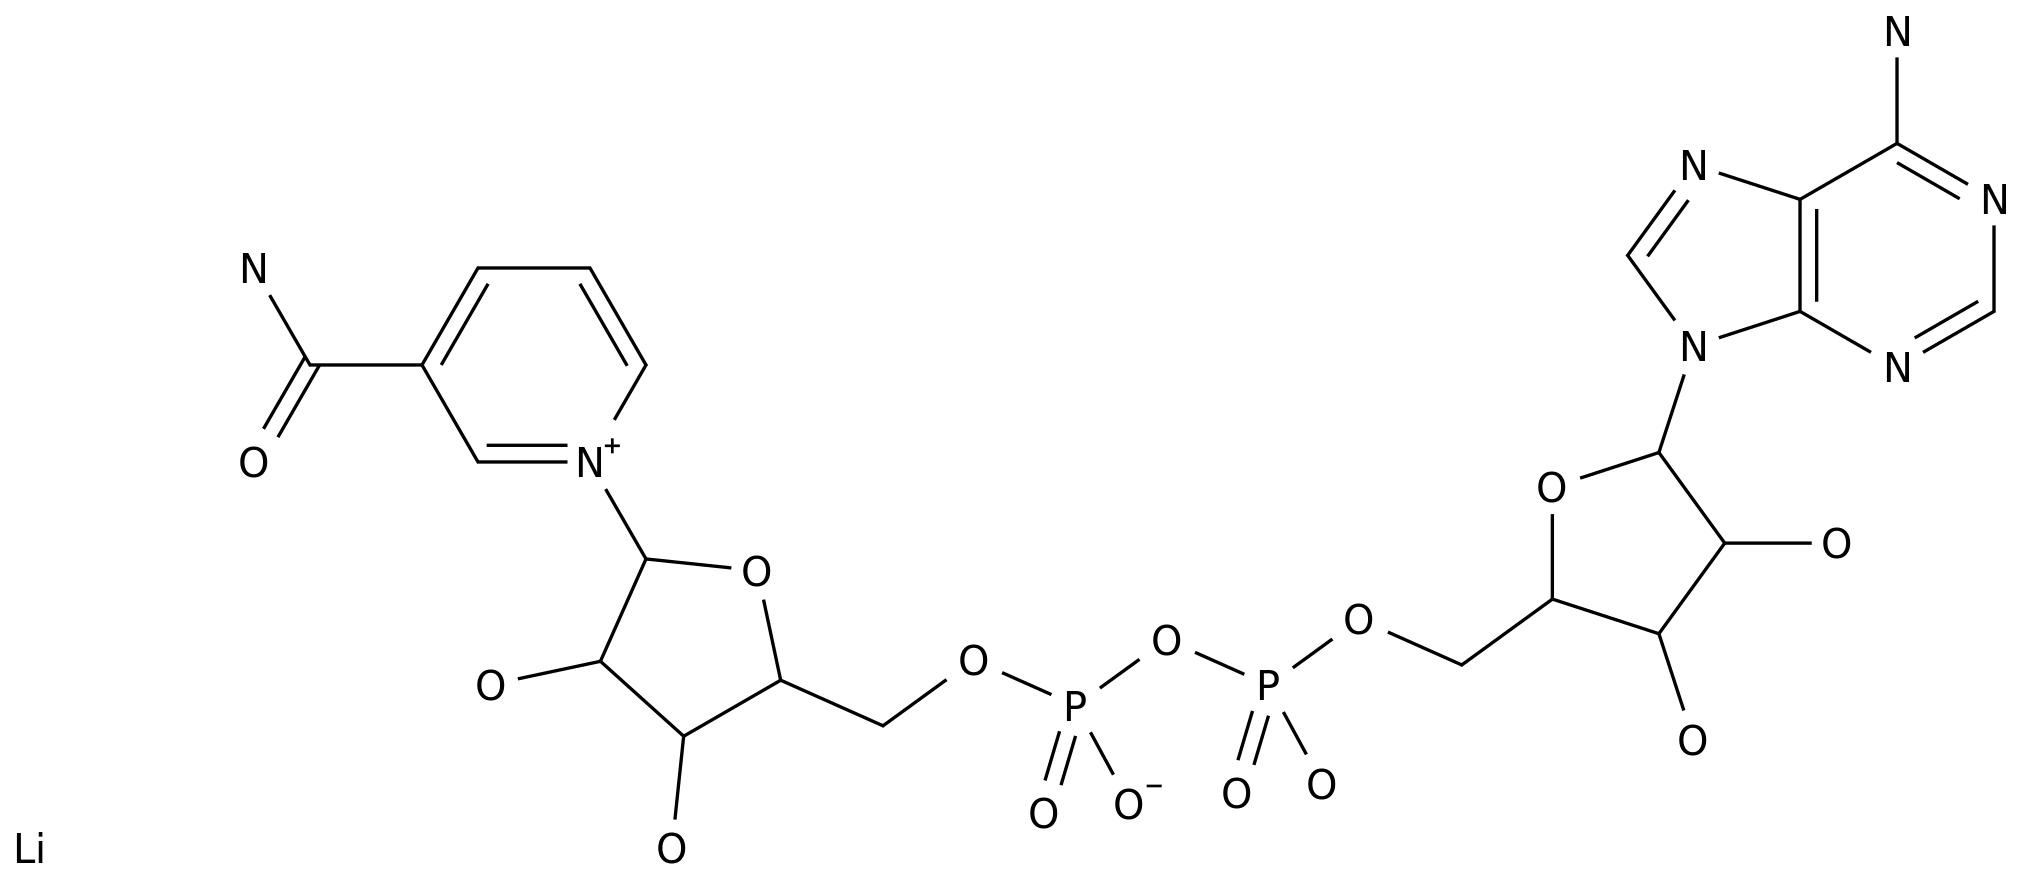 b-Nicotinamide-adenine dinucleotide, Li